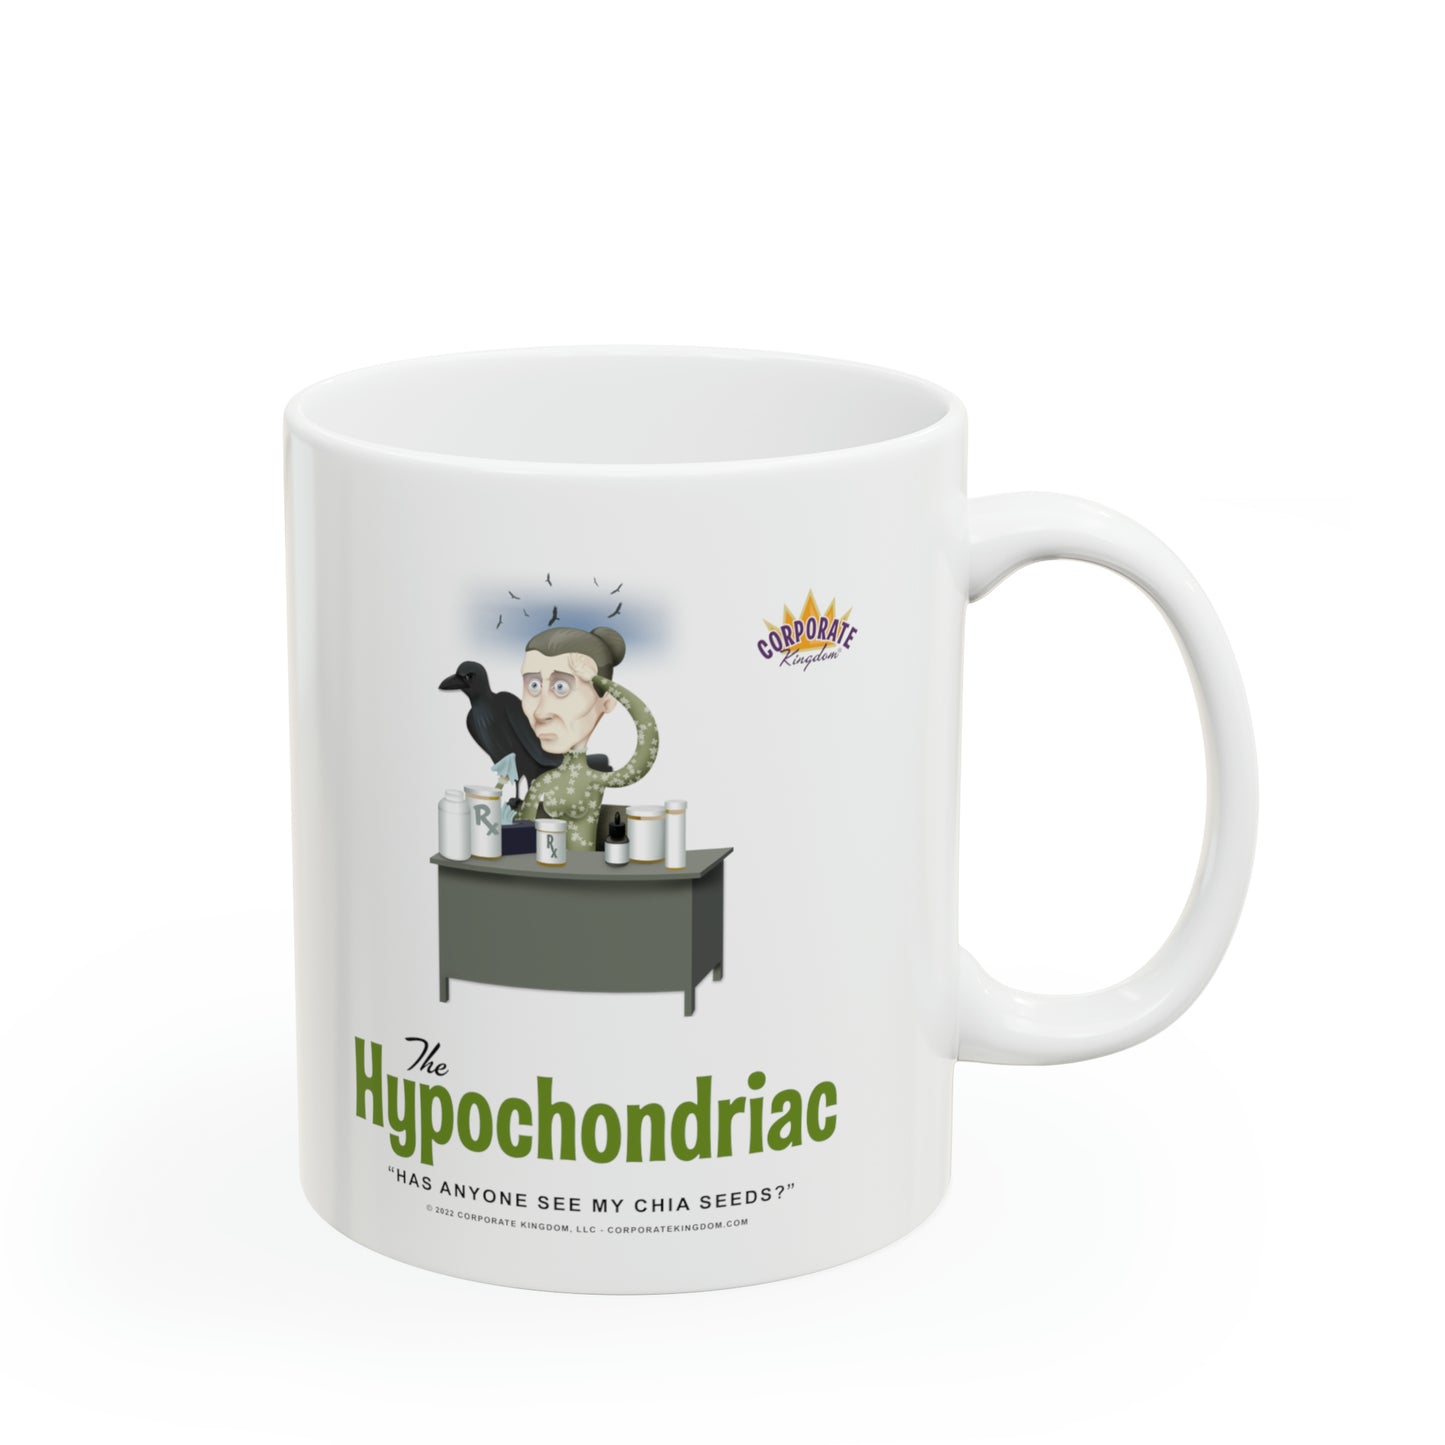 Hypochondriac Coffee Mug by Corporate Kingdom®